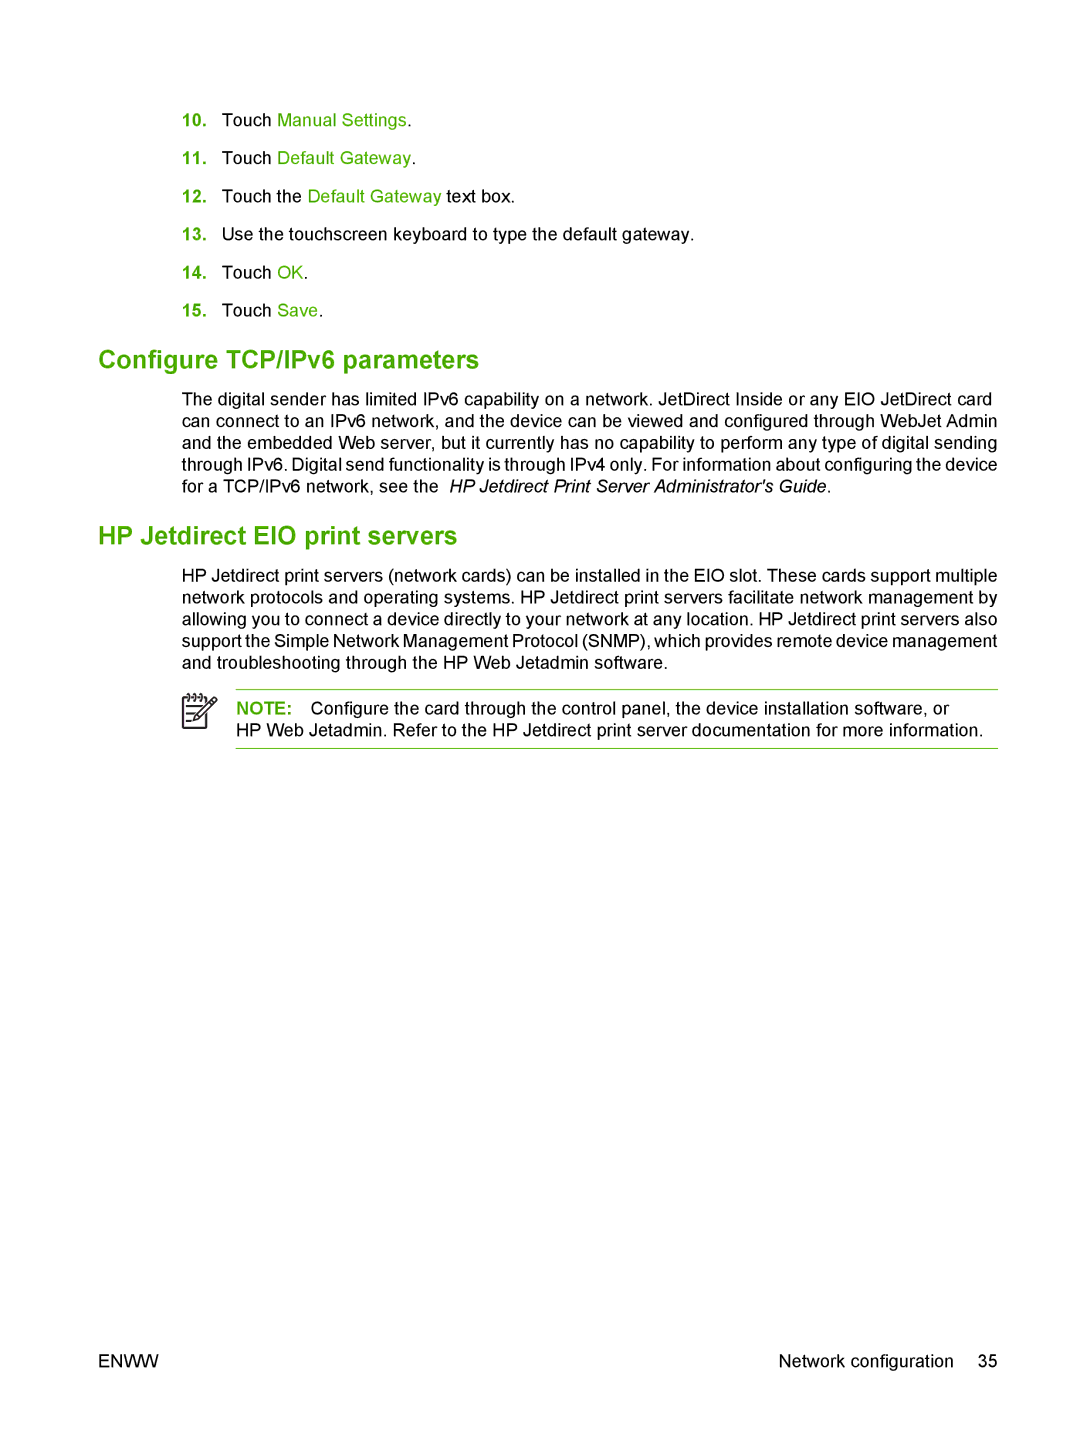 HP 9250C manual Configure TCP/IPv6 parameters, HP Jetdirect EIO print servers 